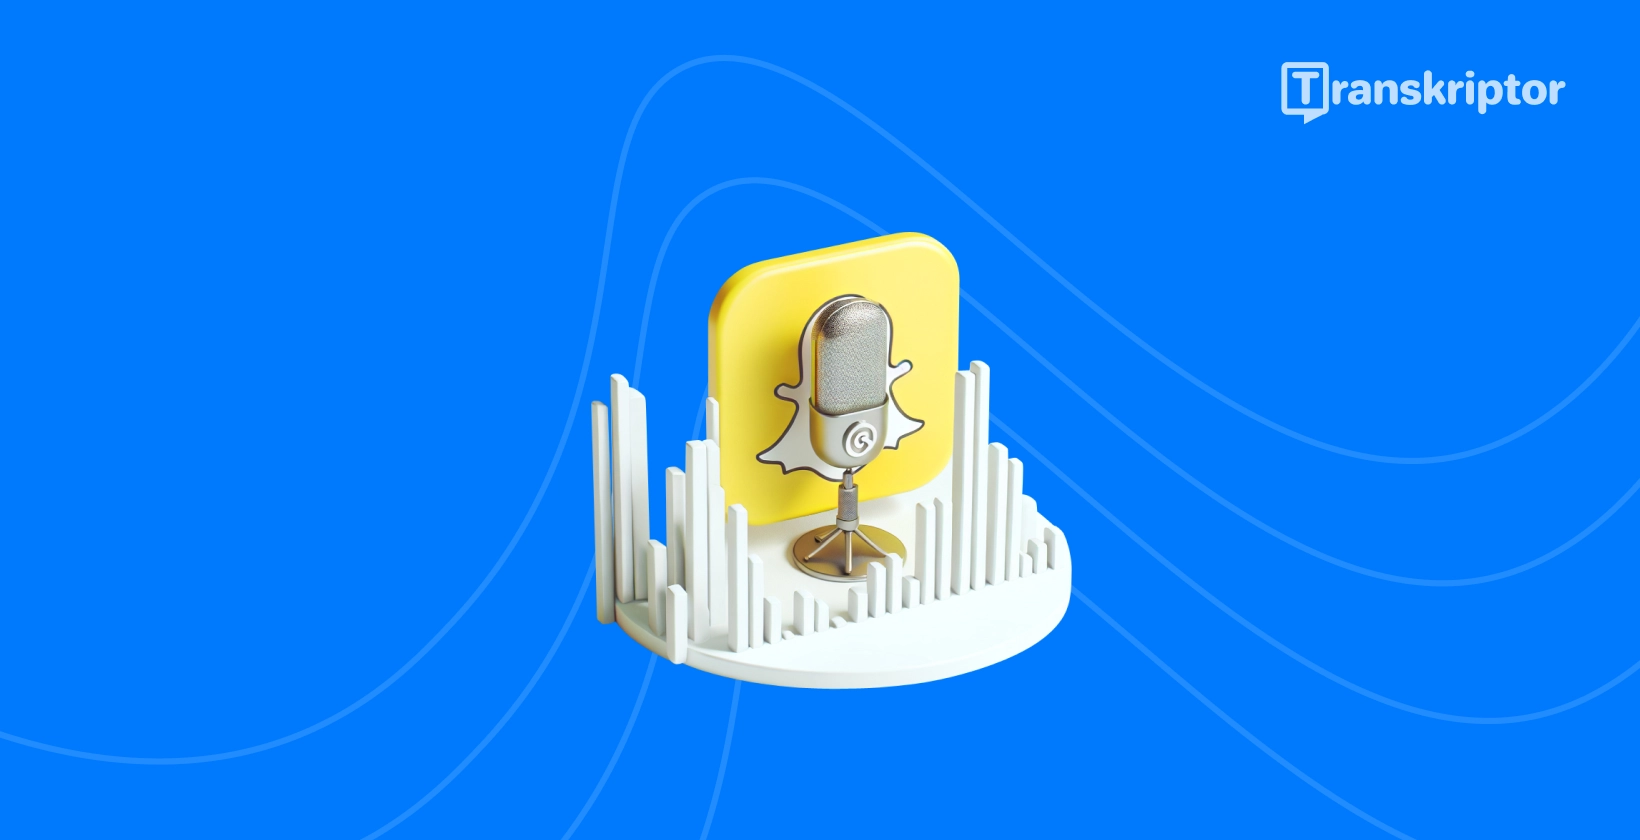 Snapchat i ikona mikrofona koja simbolizuje audio vodič za transkripciju Transkriptor.